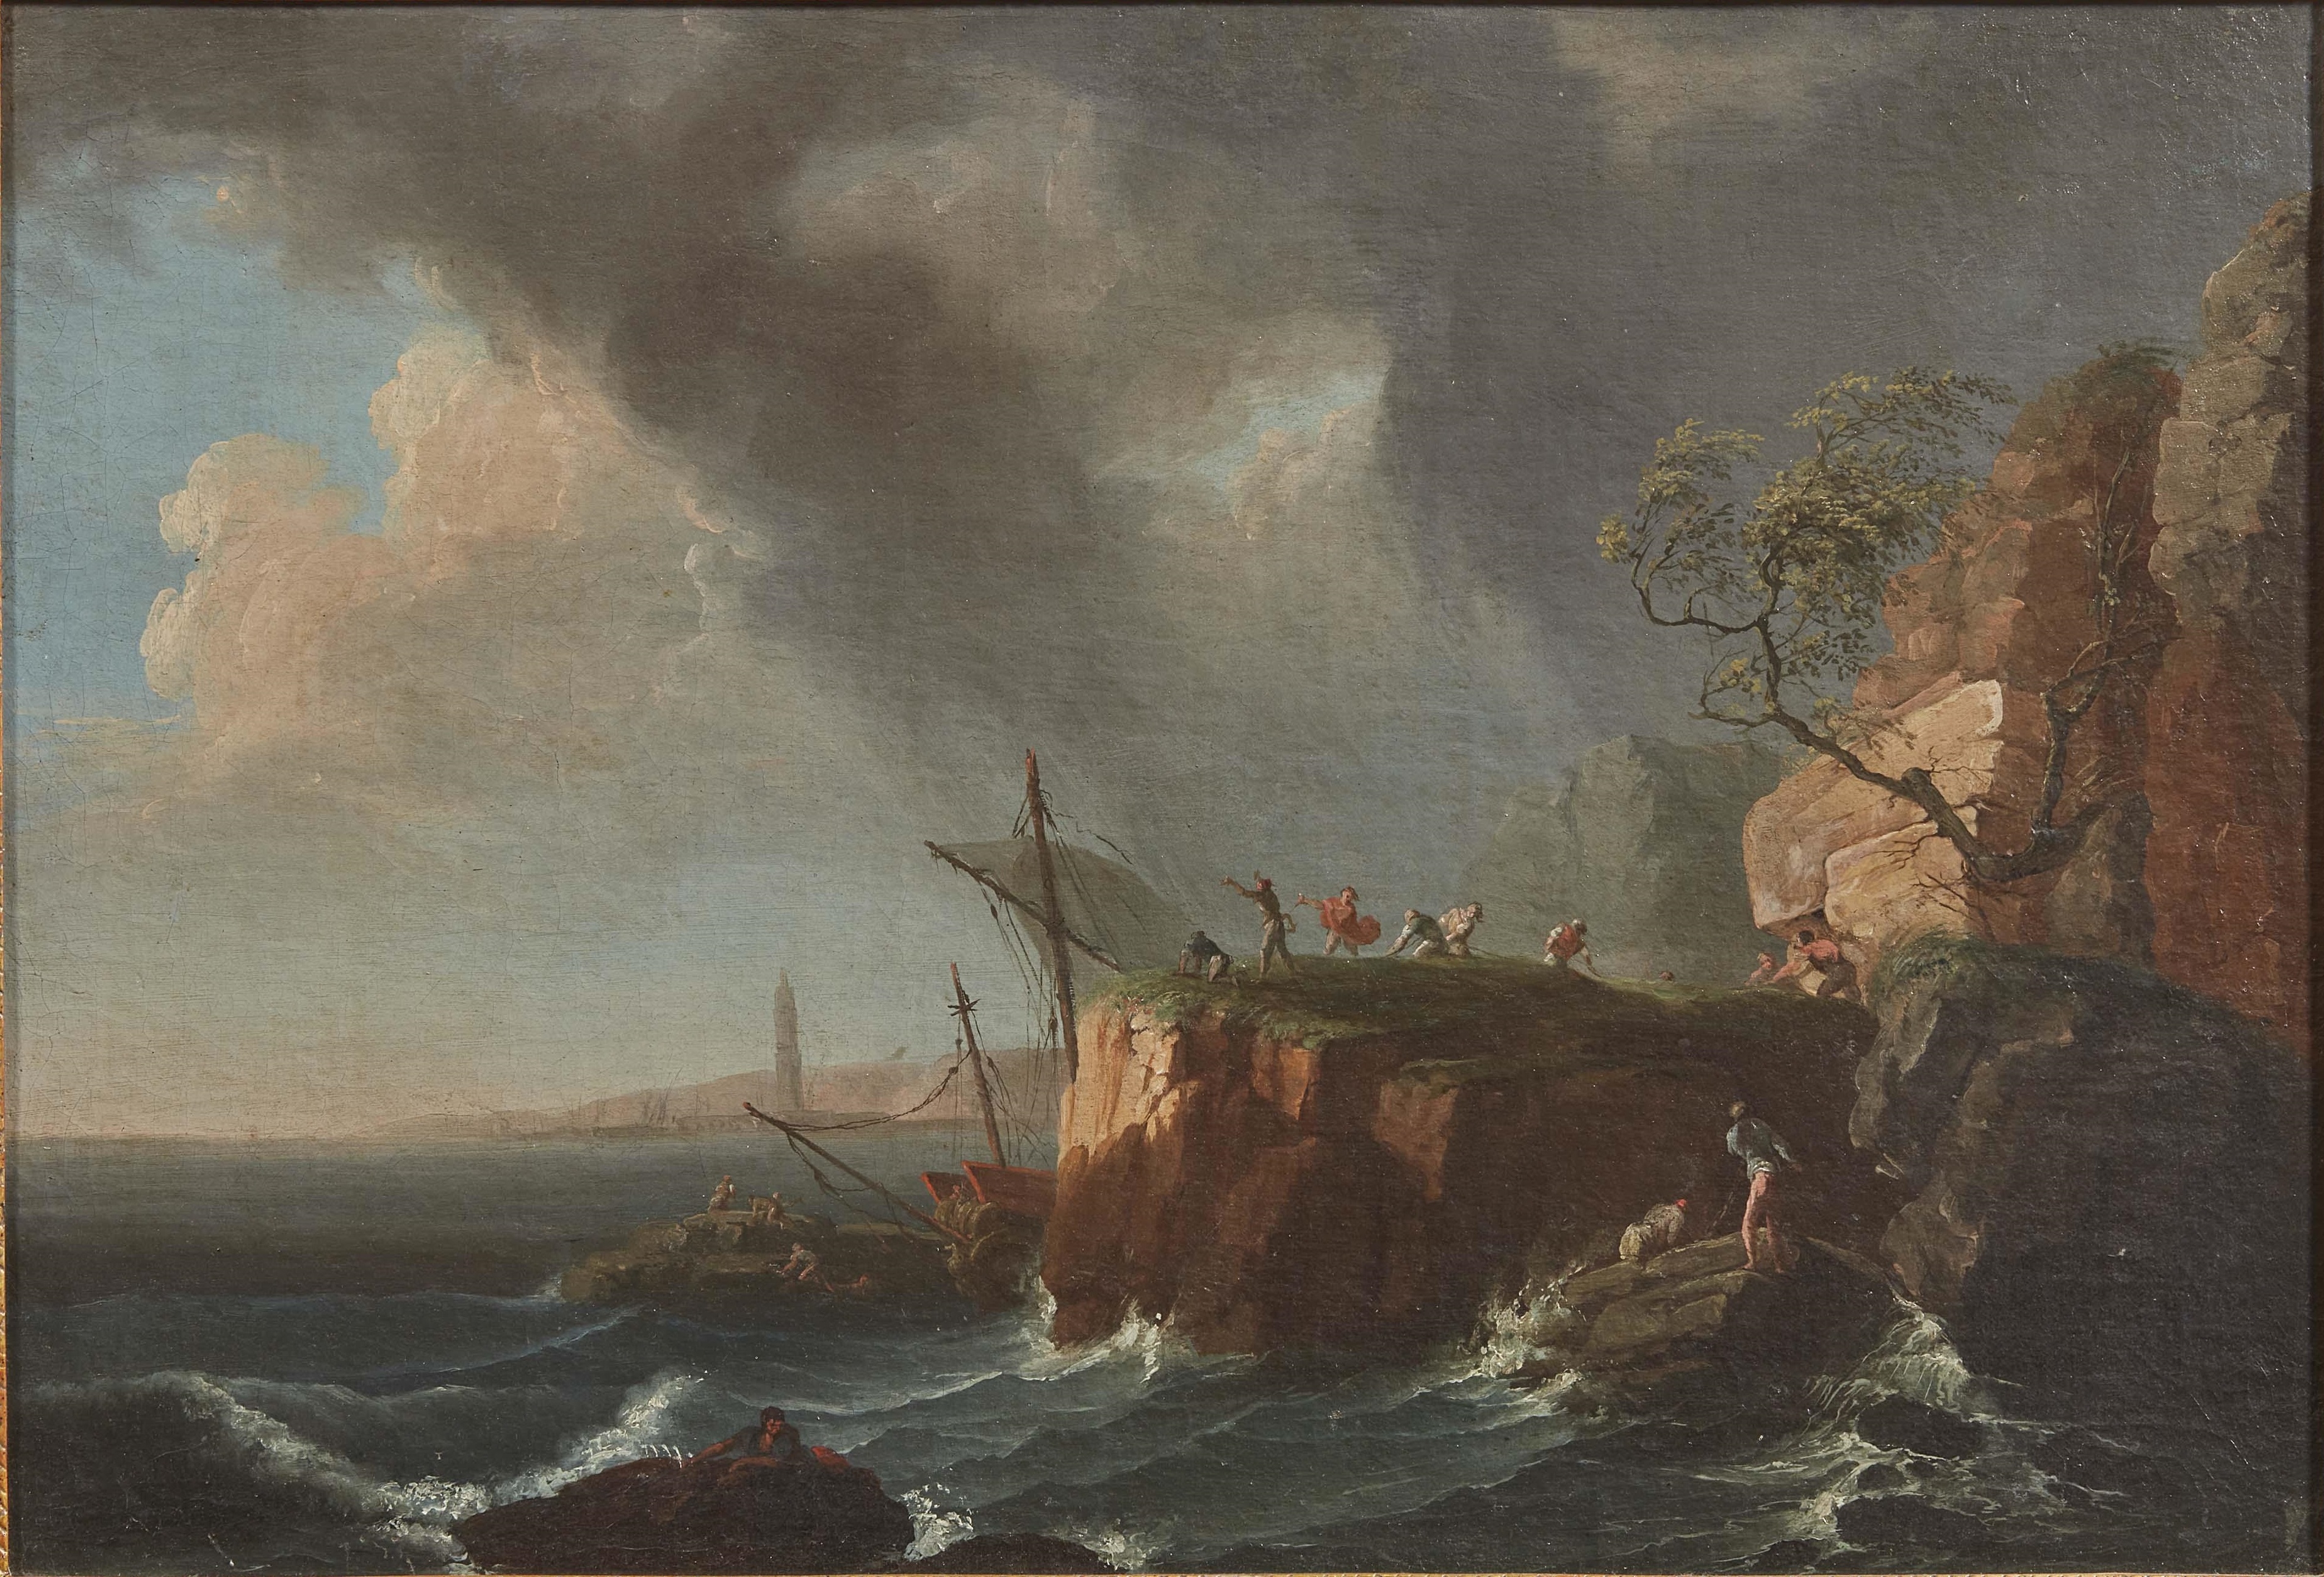 SEASCAPE IN A STORM by Roman School, 18th Century